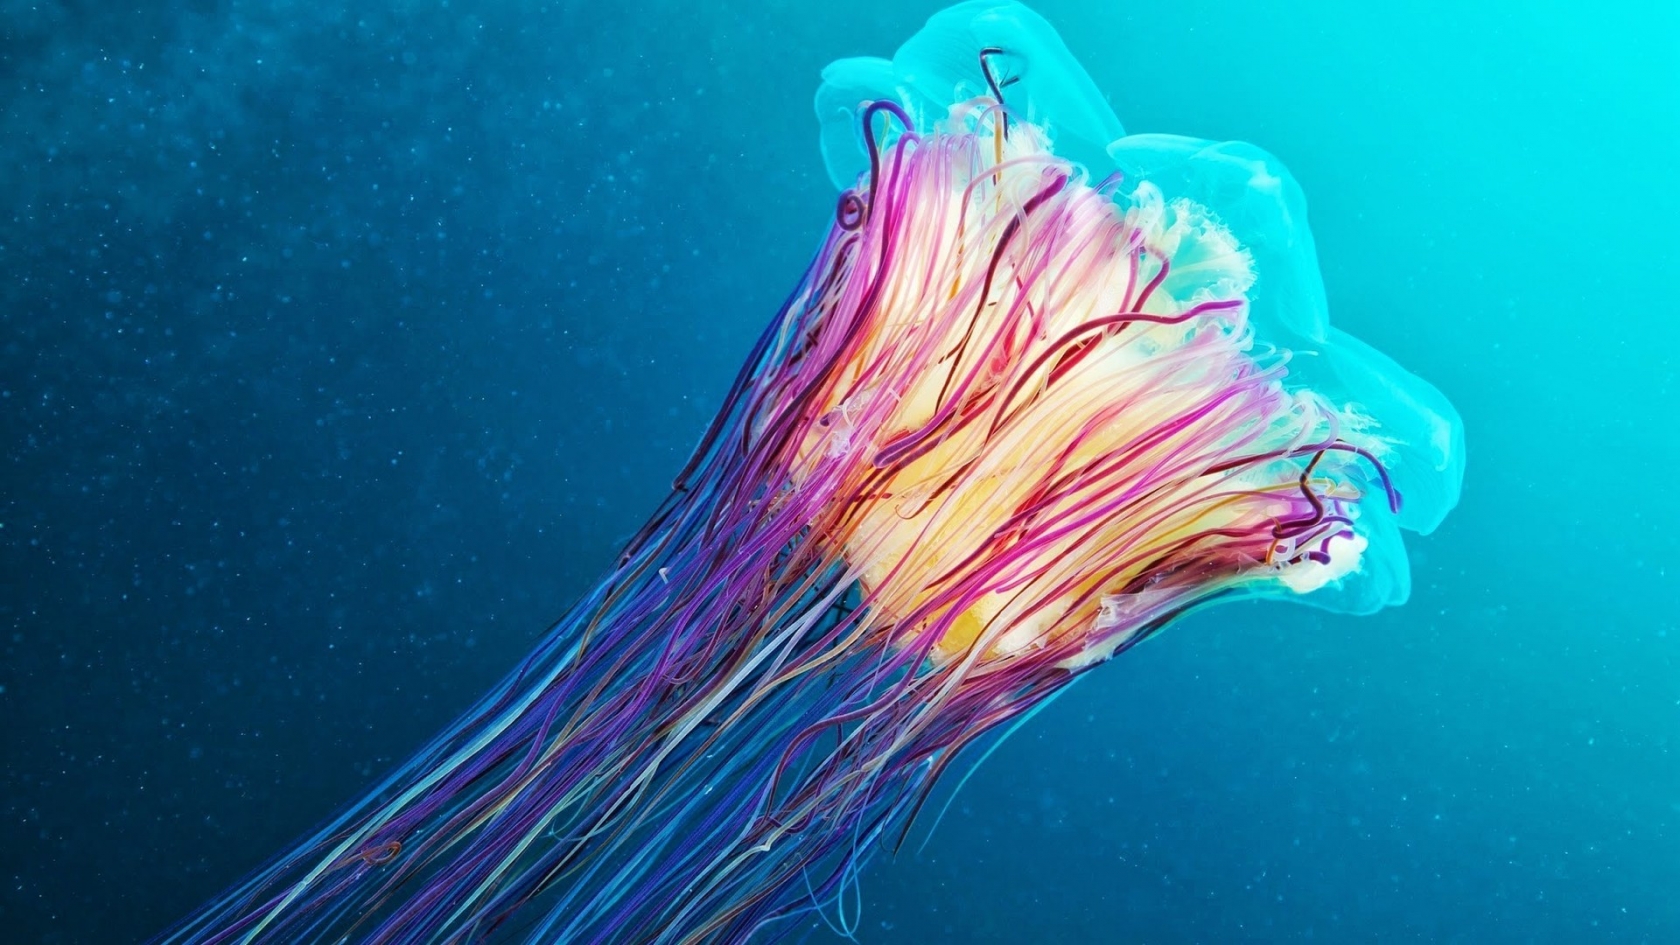 Jellyfish for 1680 x 945 HDTV resolution